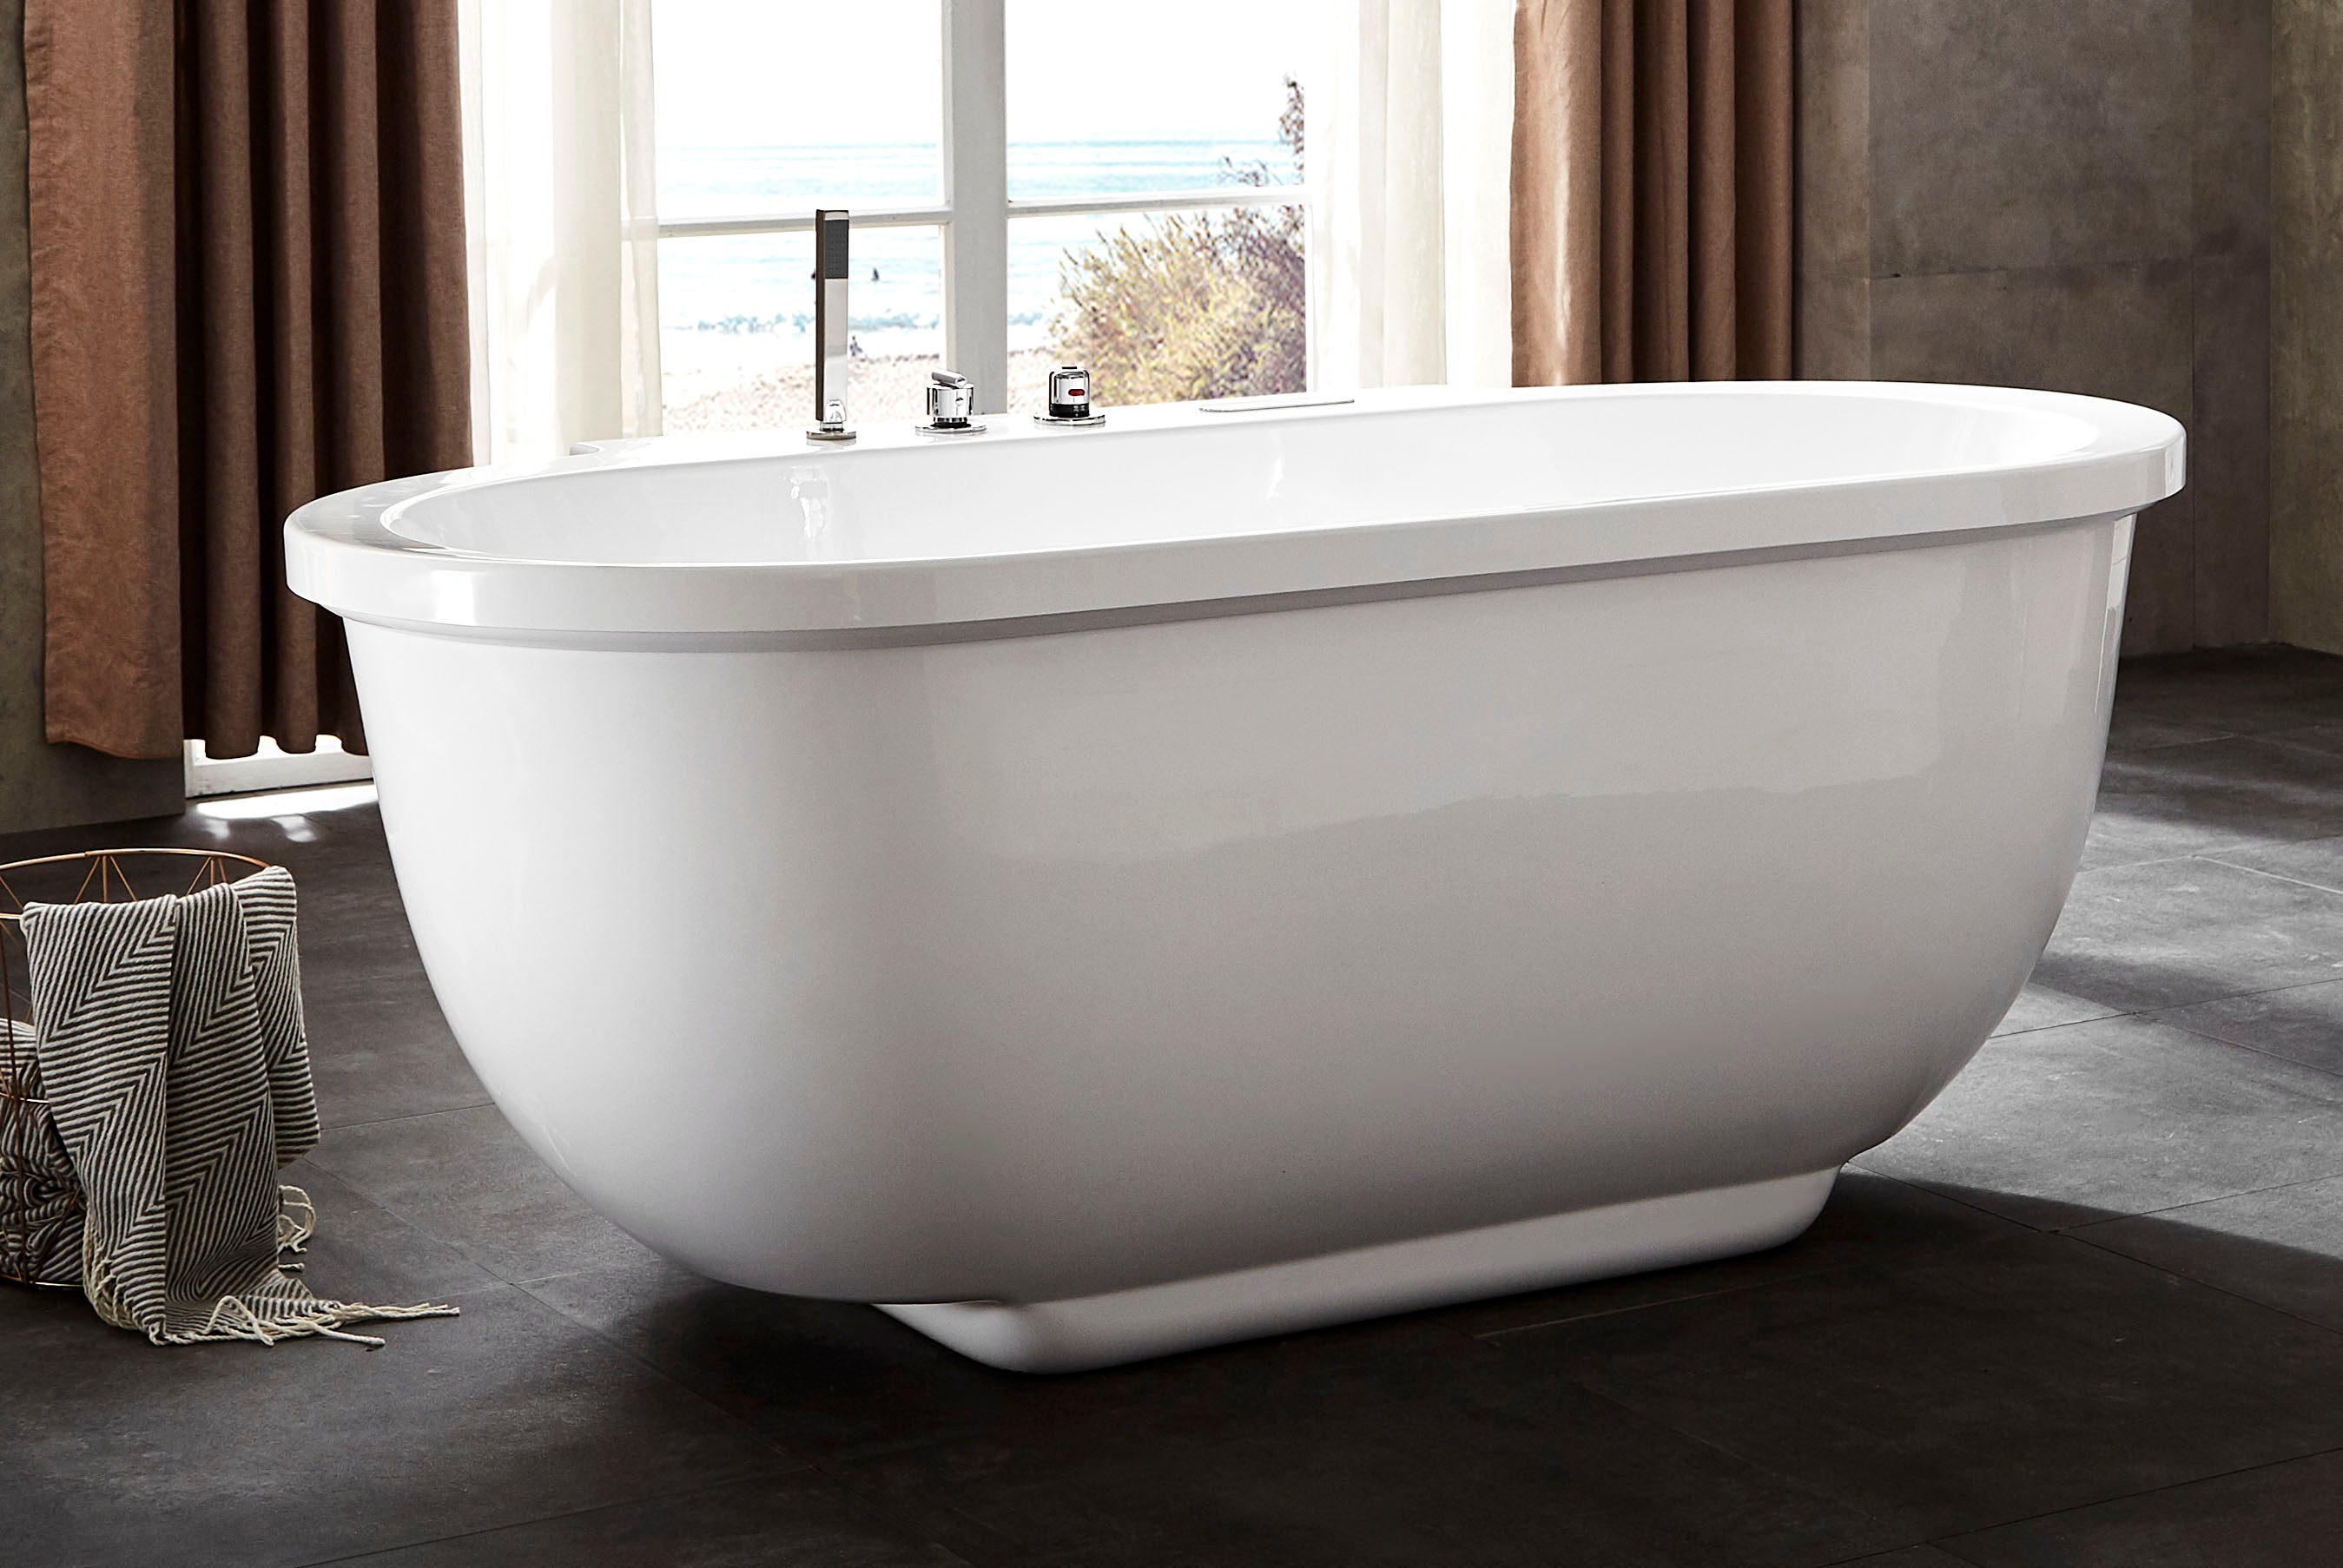 EAGO AM128ETL Whirlpool Bathtub Acrylic White w/ Fixtures (6-foot)